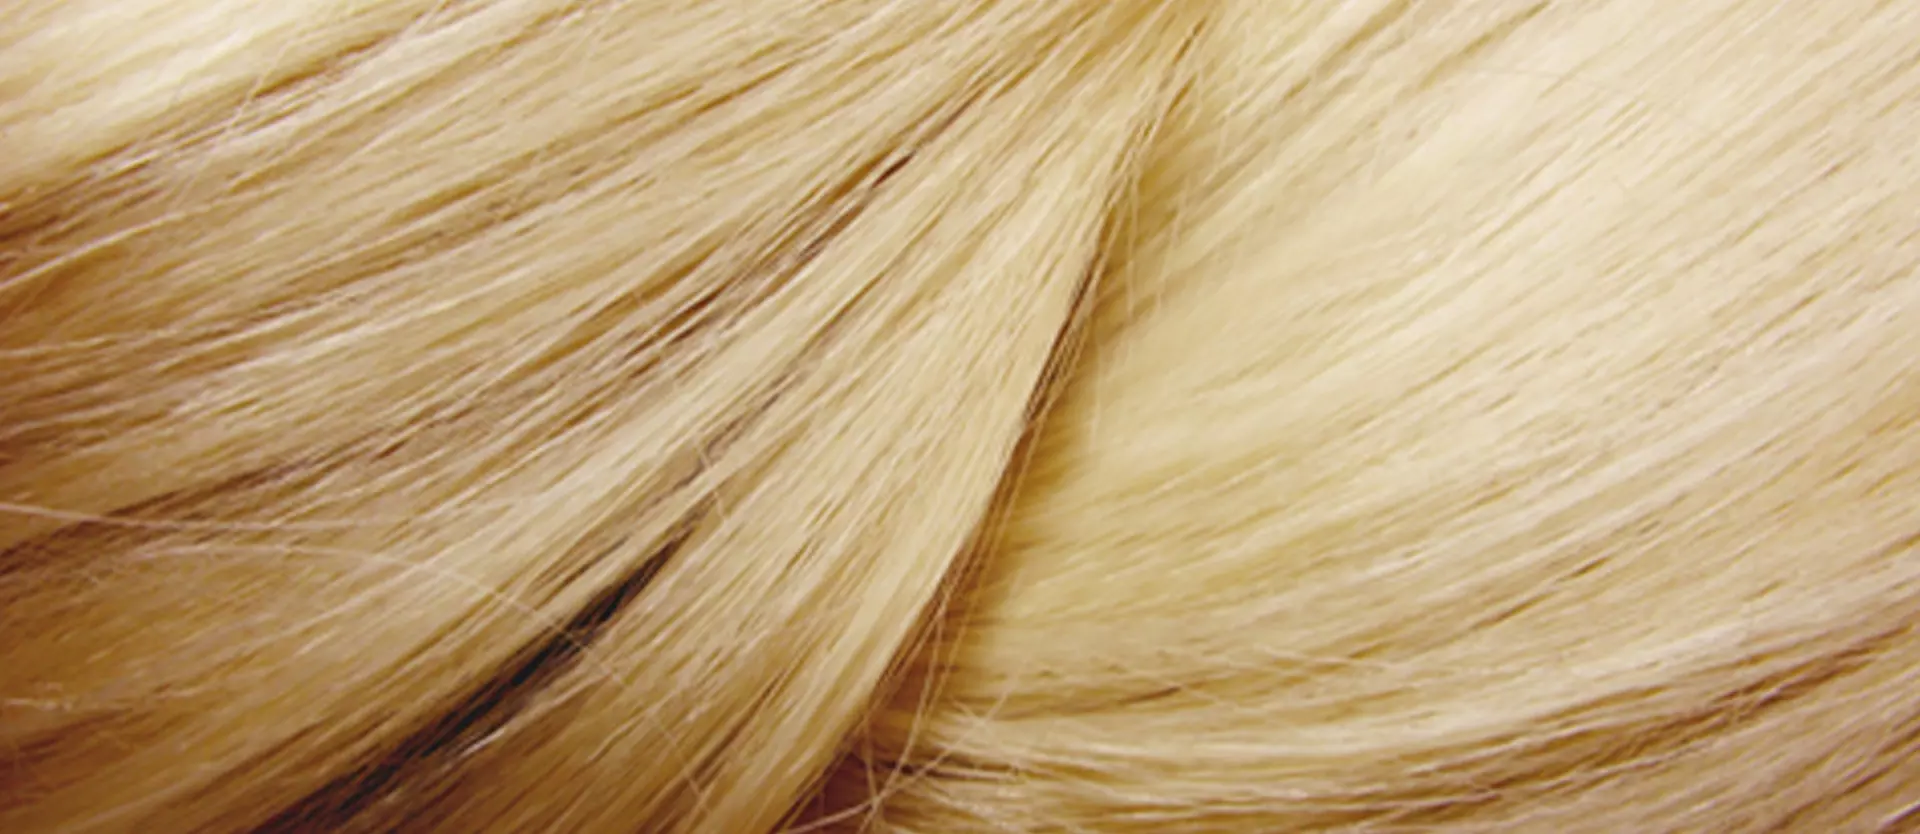 Human Hair or Synthetic: Choosing Custom Wigs